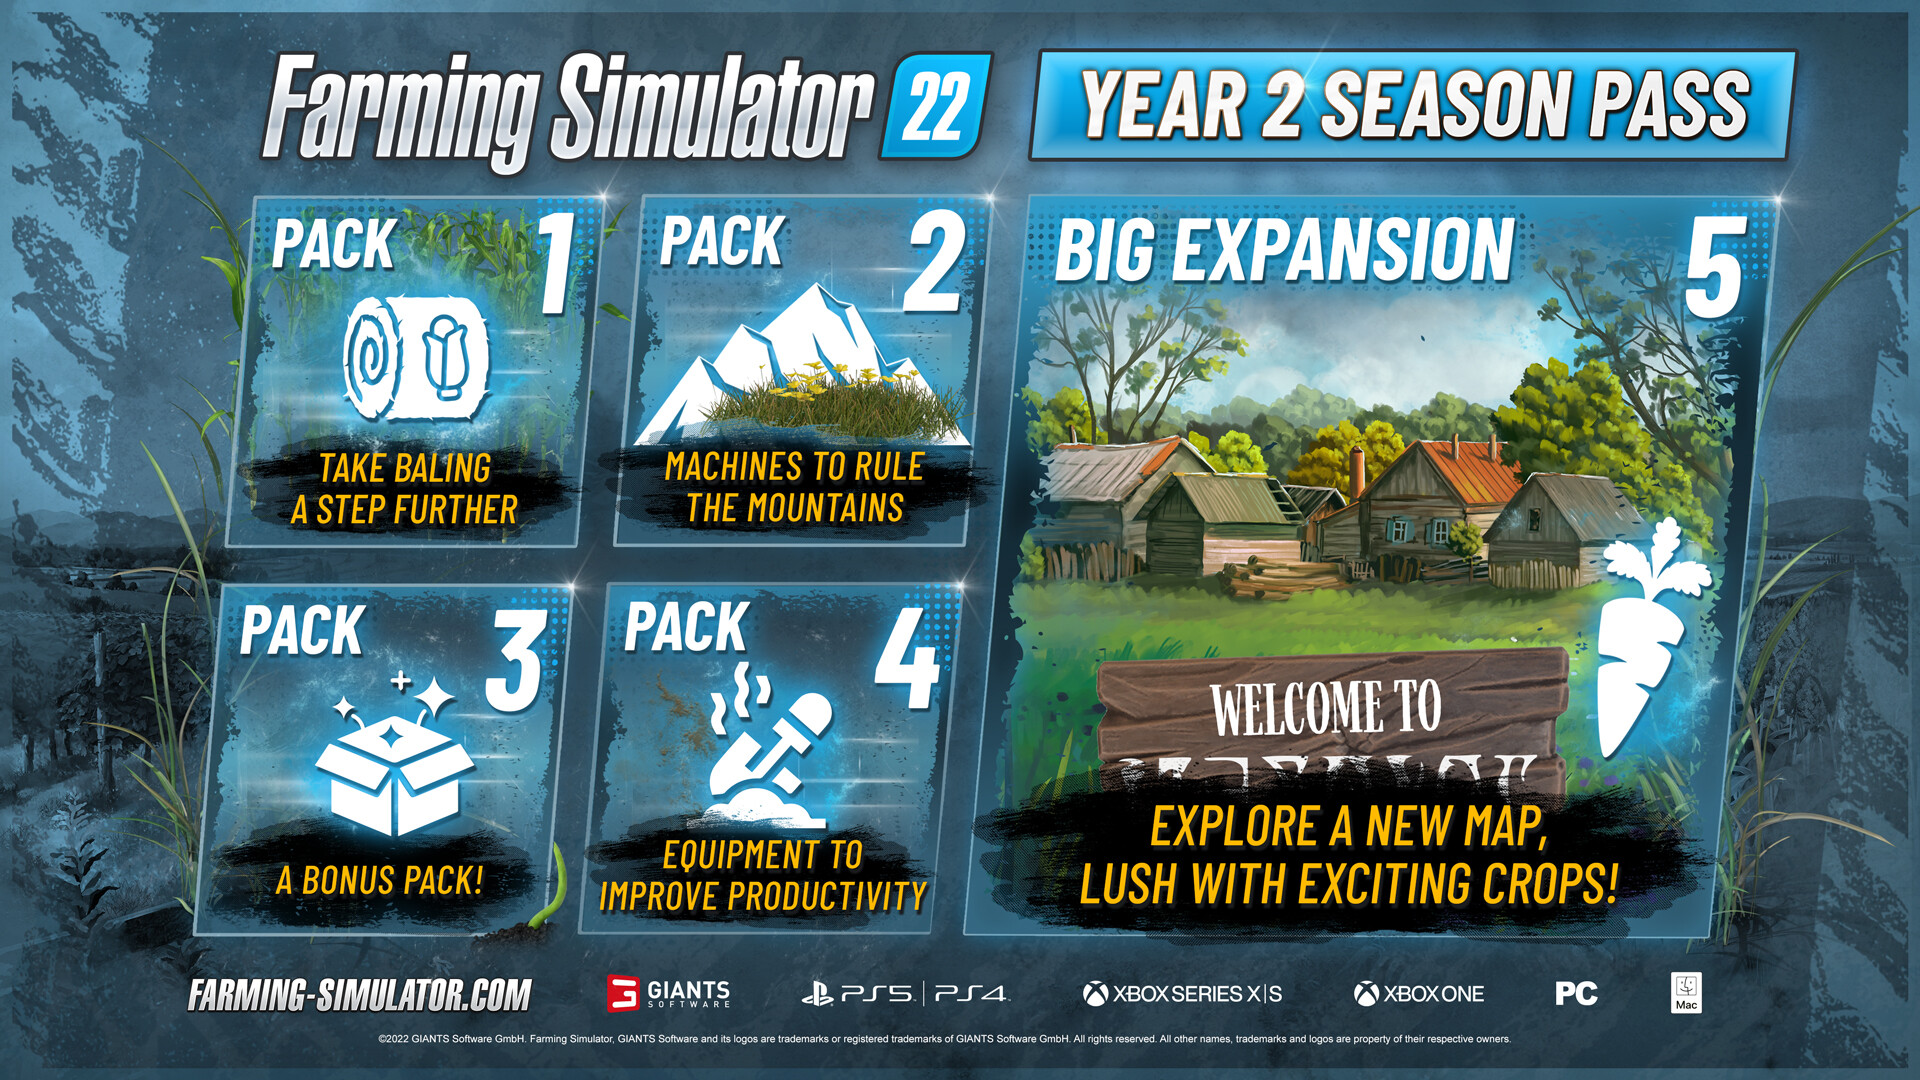 Farming Simulator 22 - Year 2 Season Pass DLC Steam CD Key 26.24 USD